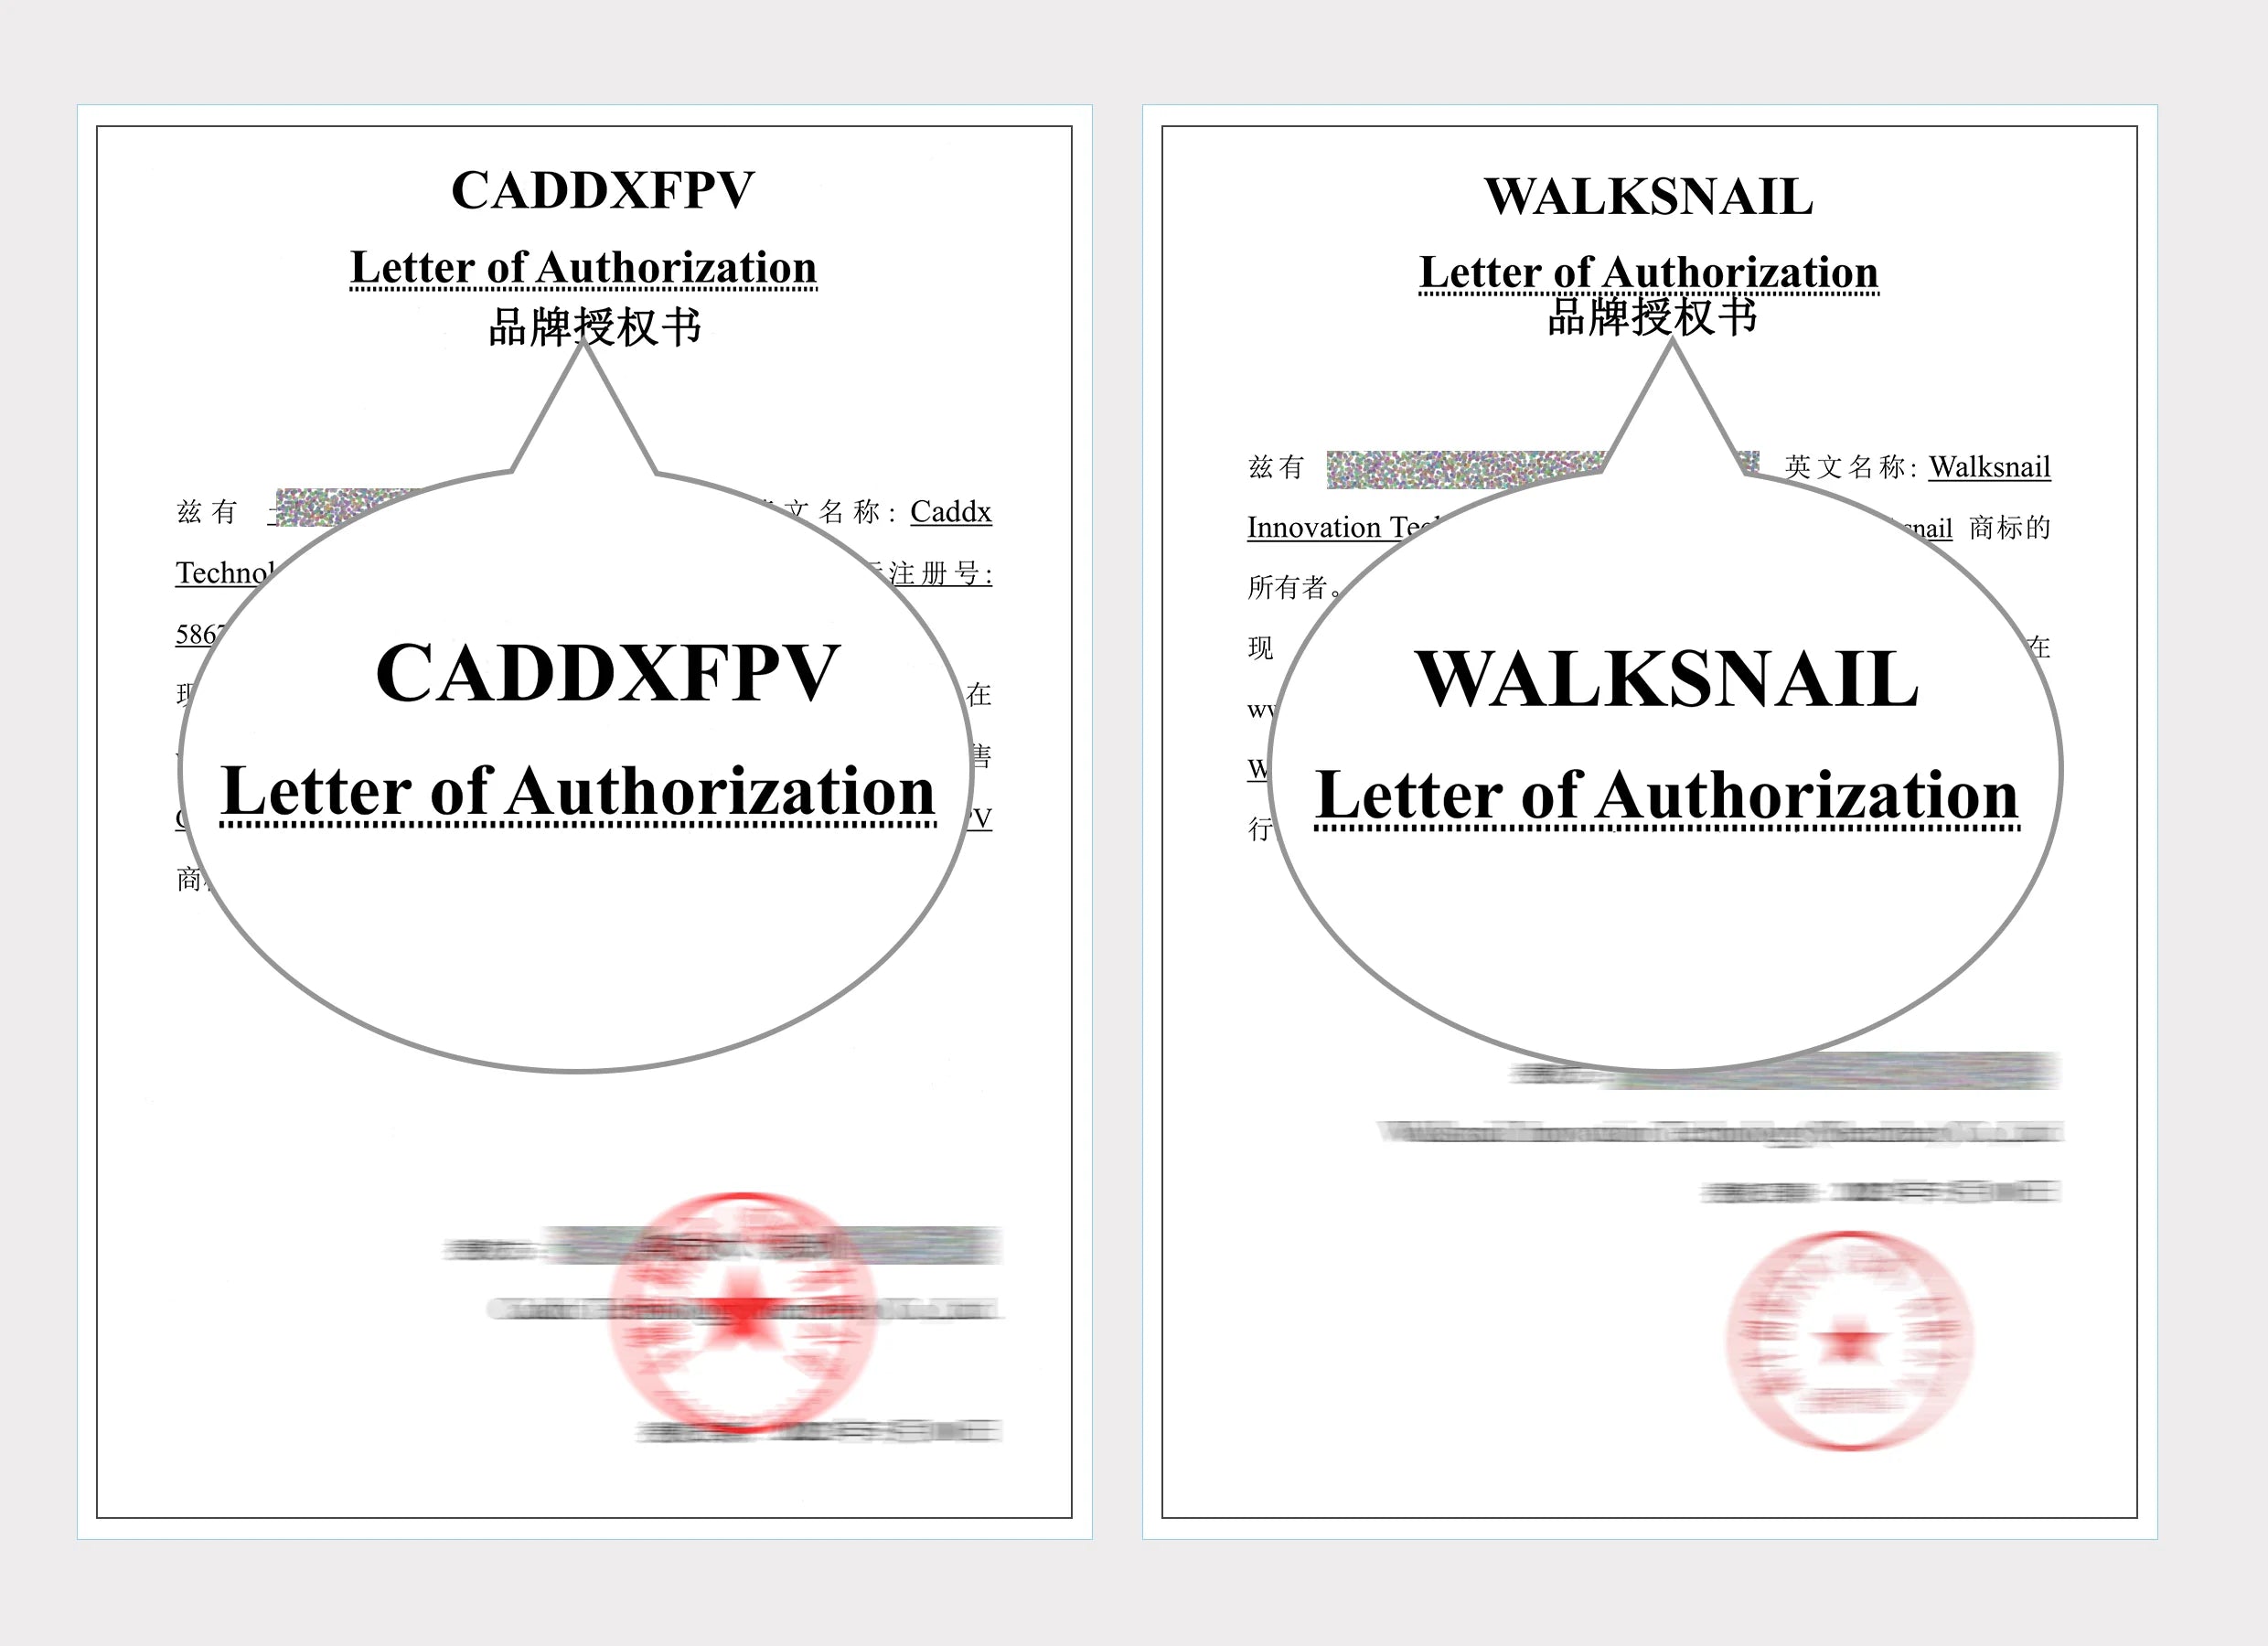 CADDX Walksnail Avatar HD Goggles X, Letter of Authorization A#tztx#; FFER# %4 T